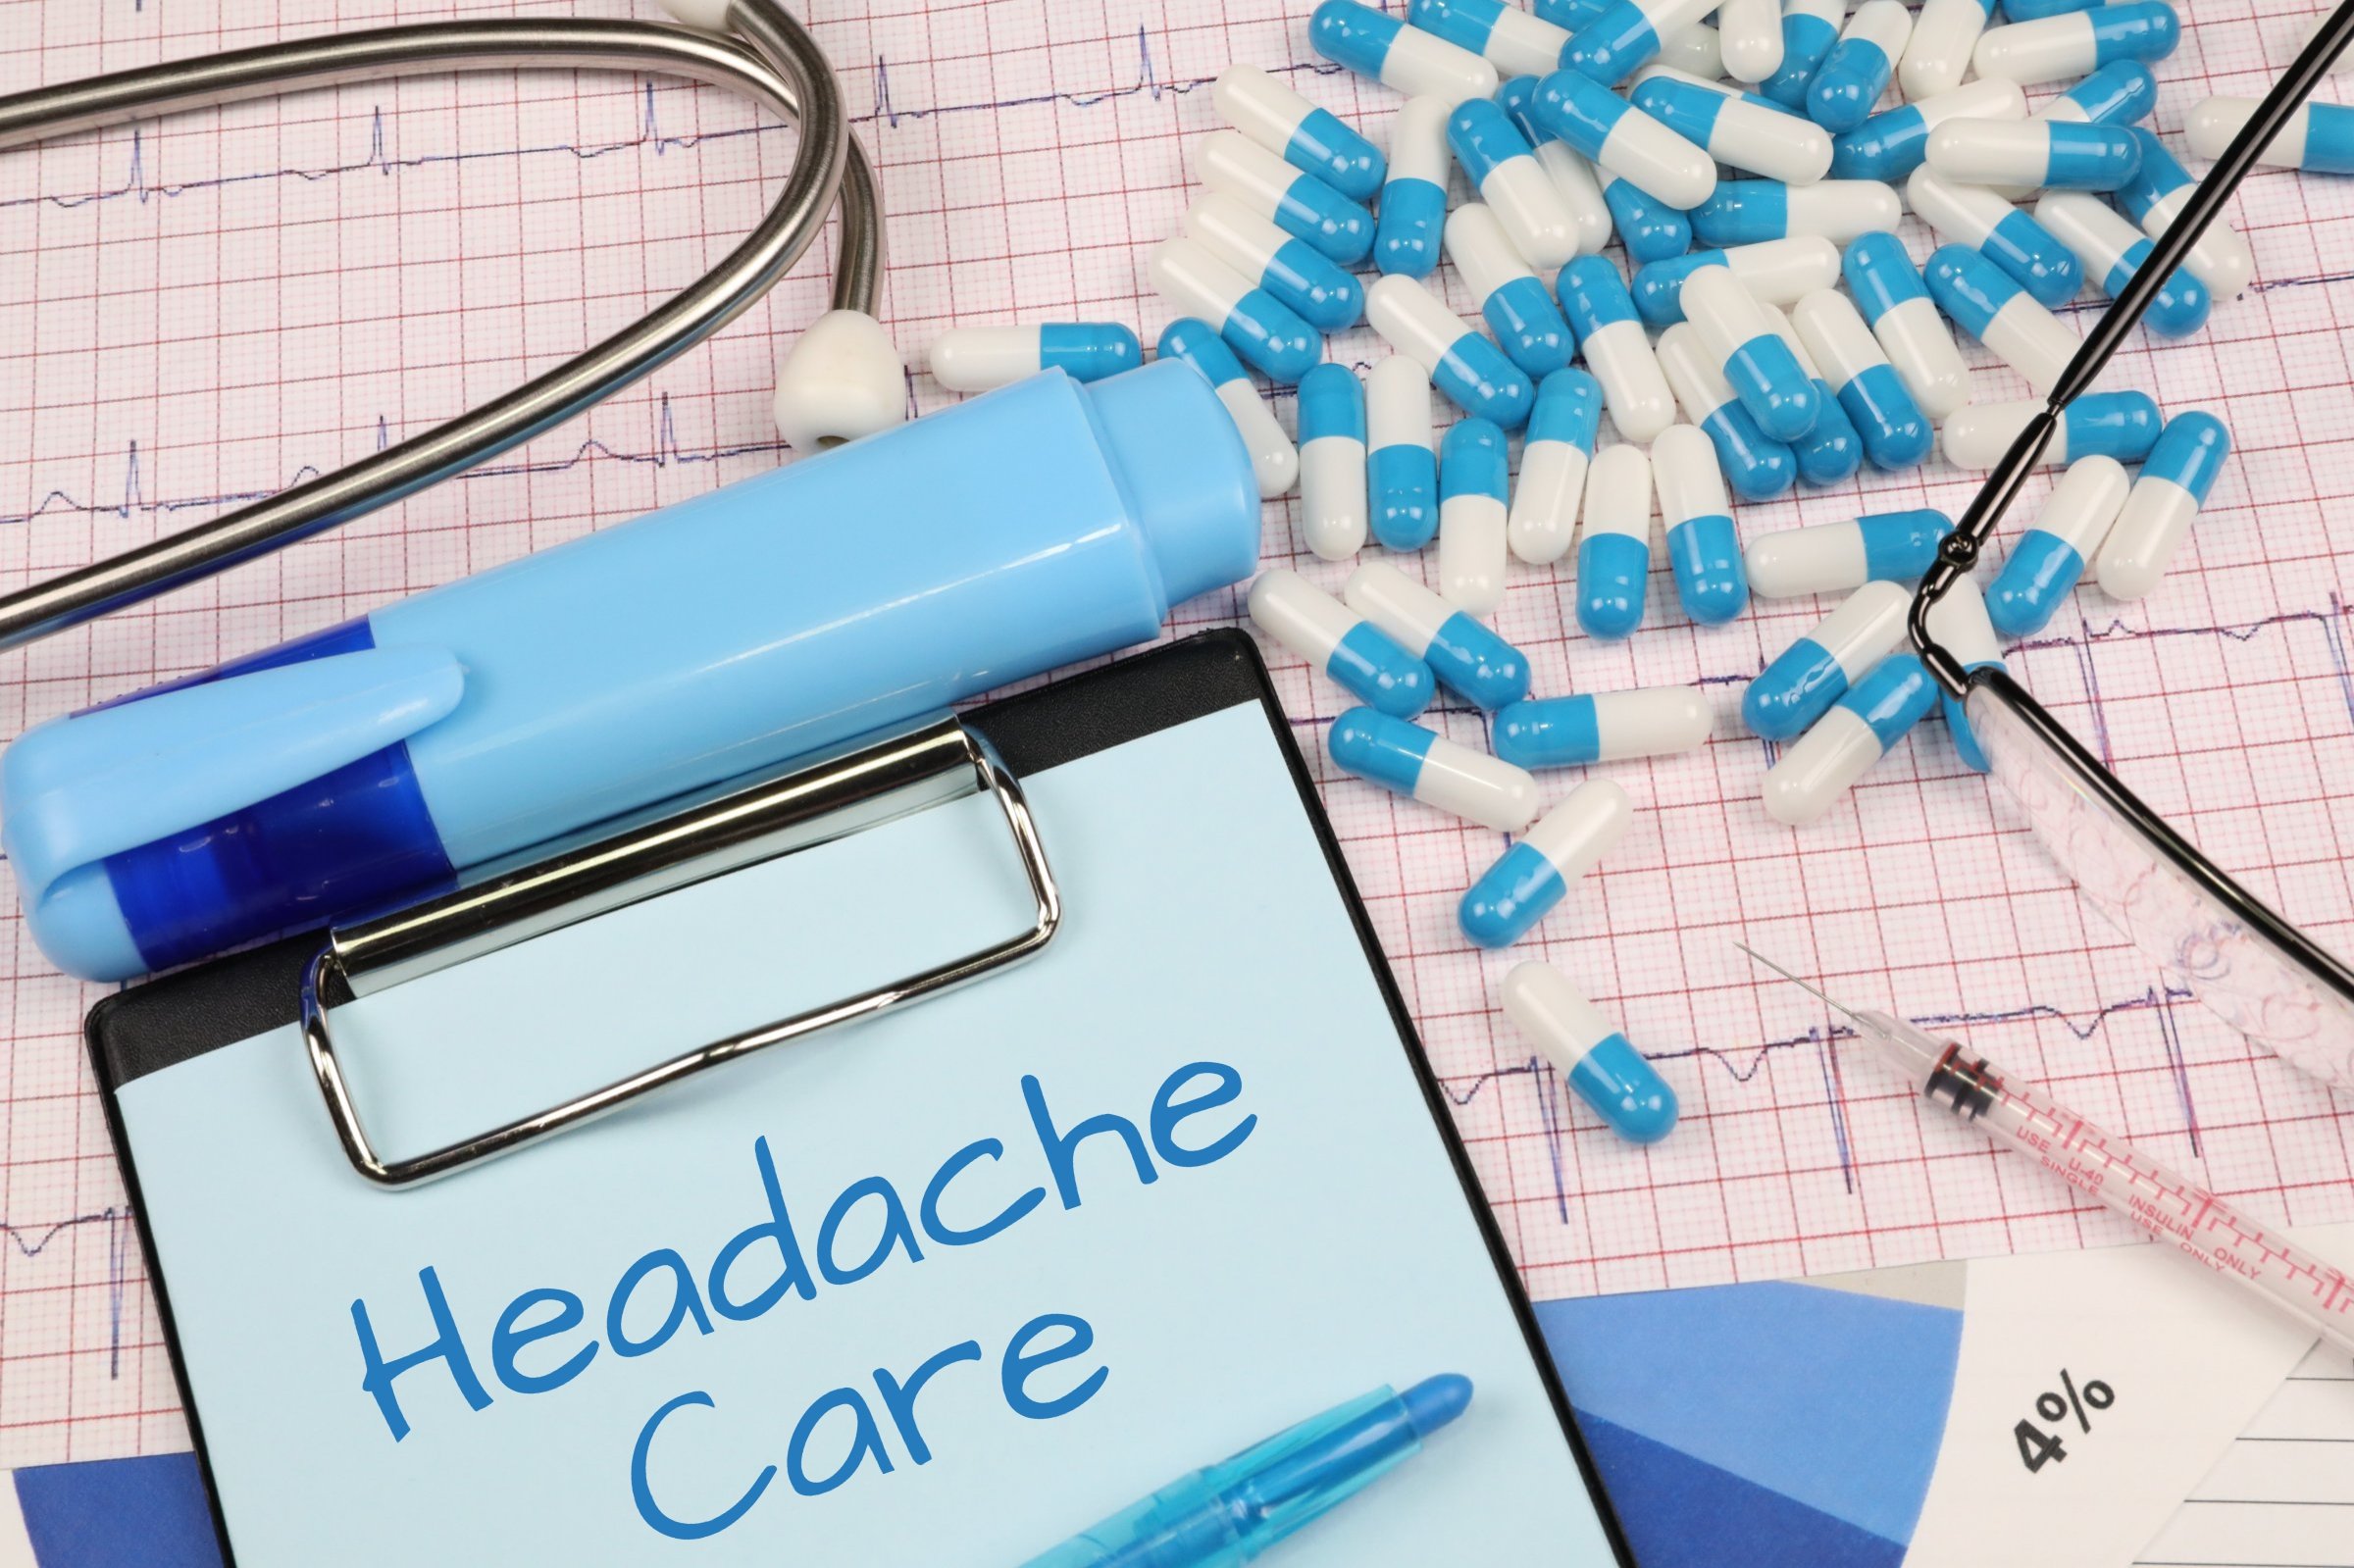 headache care